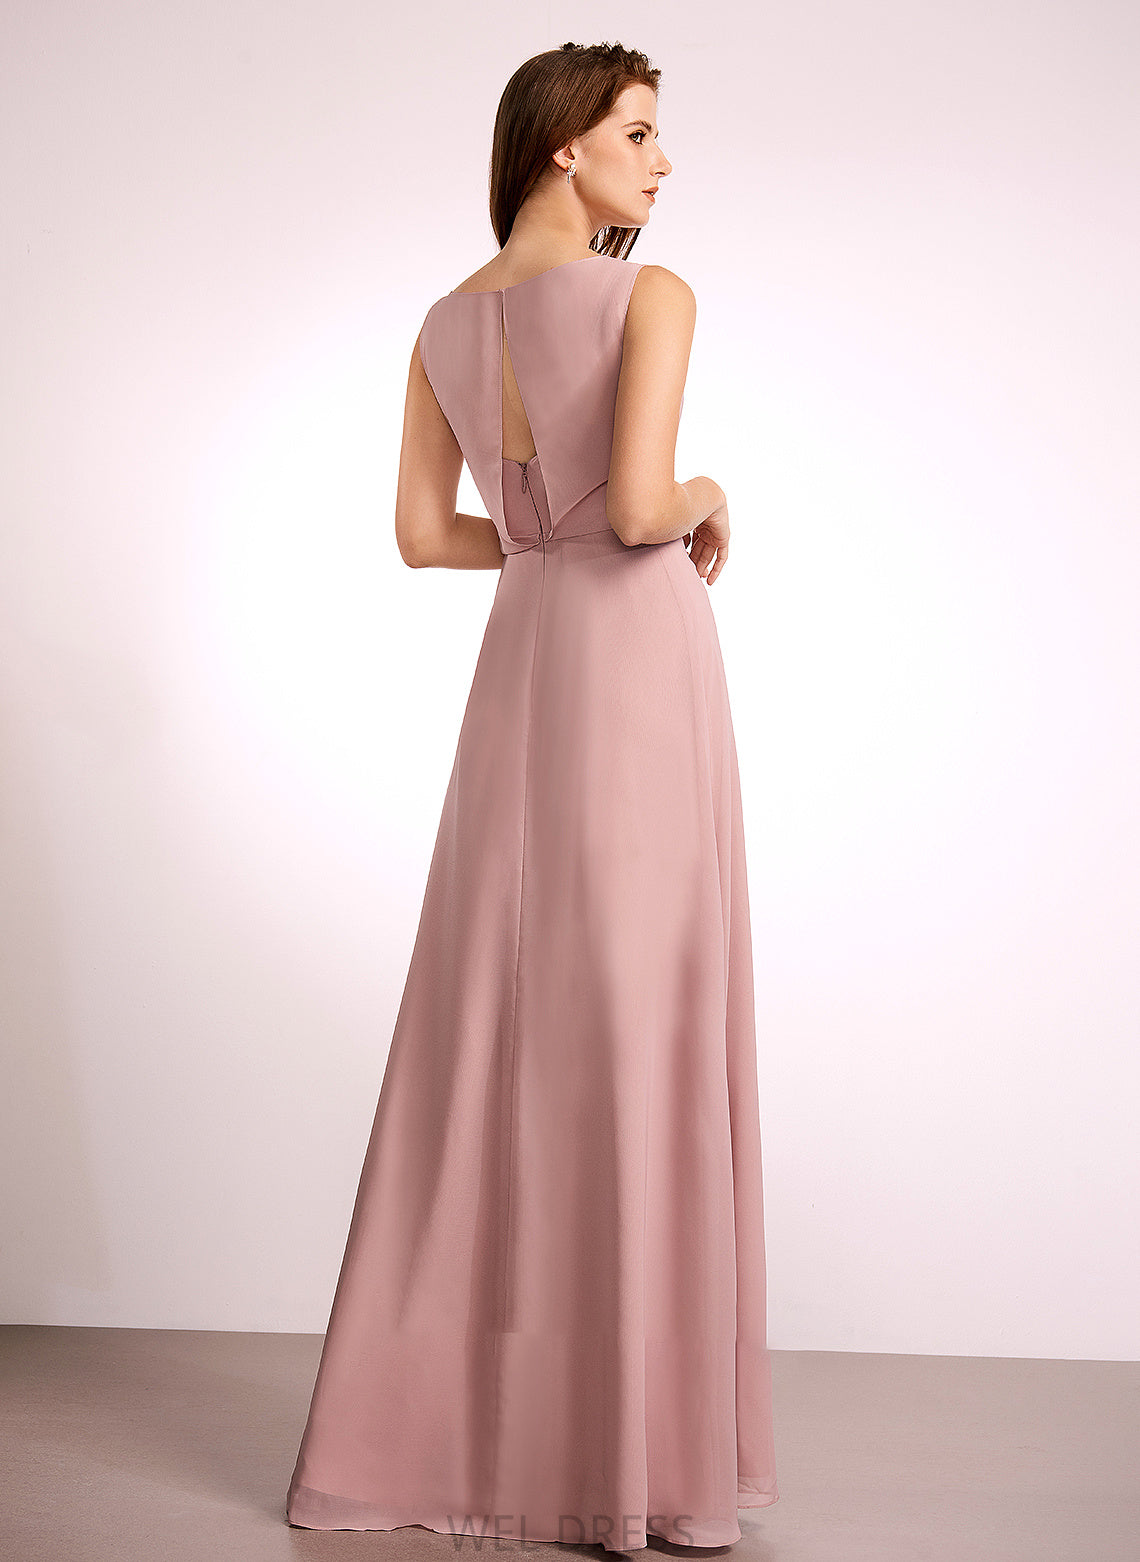 Straps A-Line Bow(s) Silhouette Embellishment Floor-Length Fabric Length Setlla Natural Waist A-Line/Princess Sleeveless